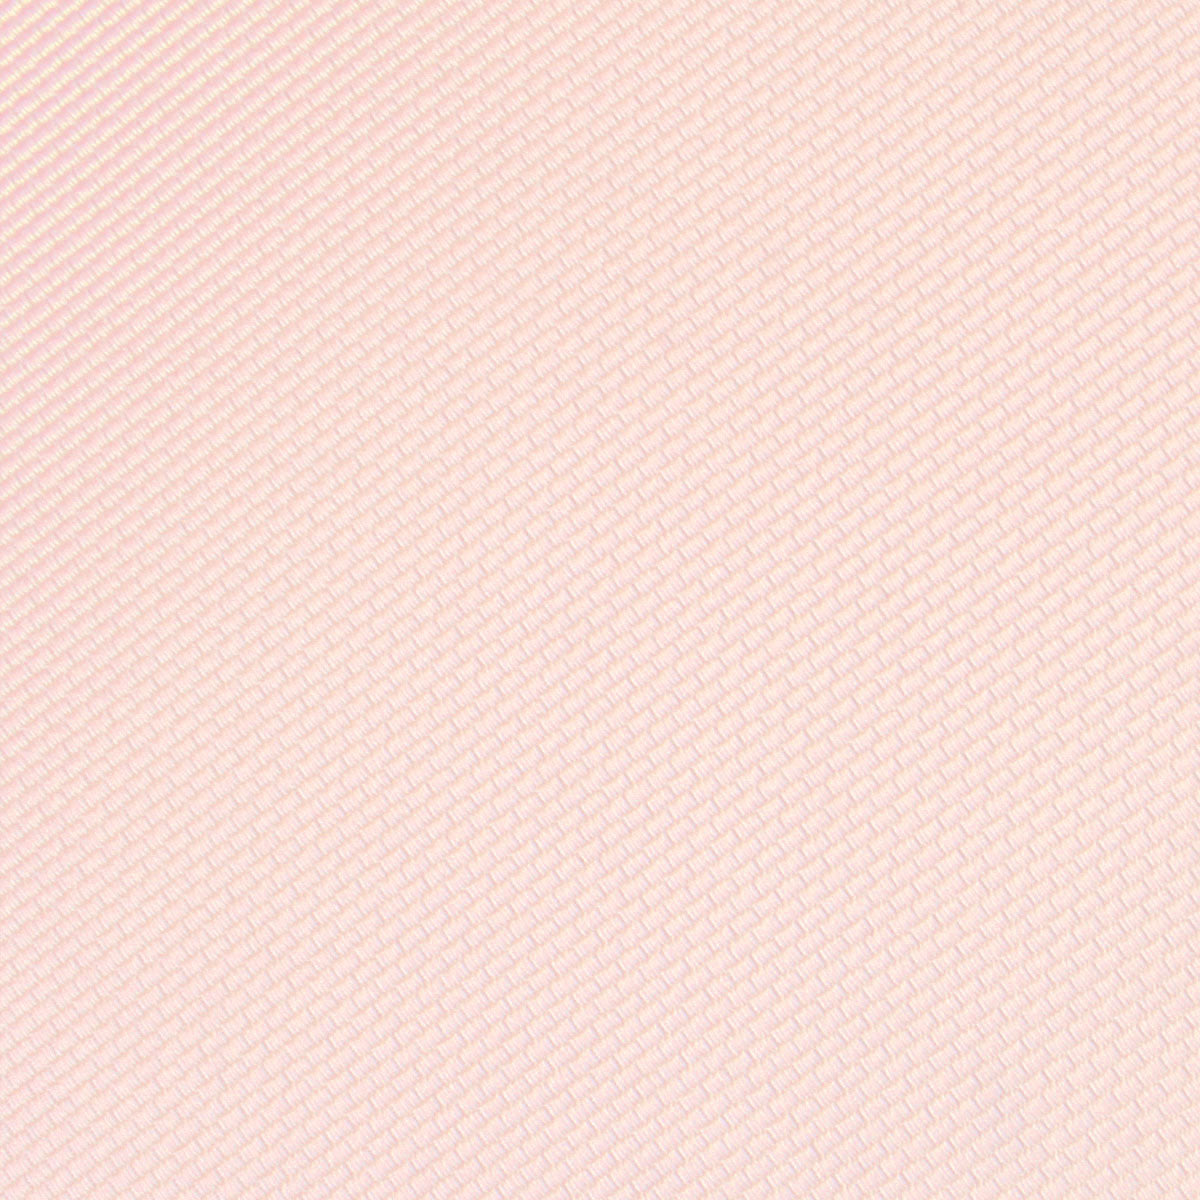 Misty Rose Pink Weave Pocket Square Fabric